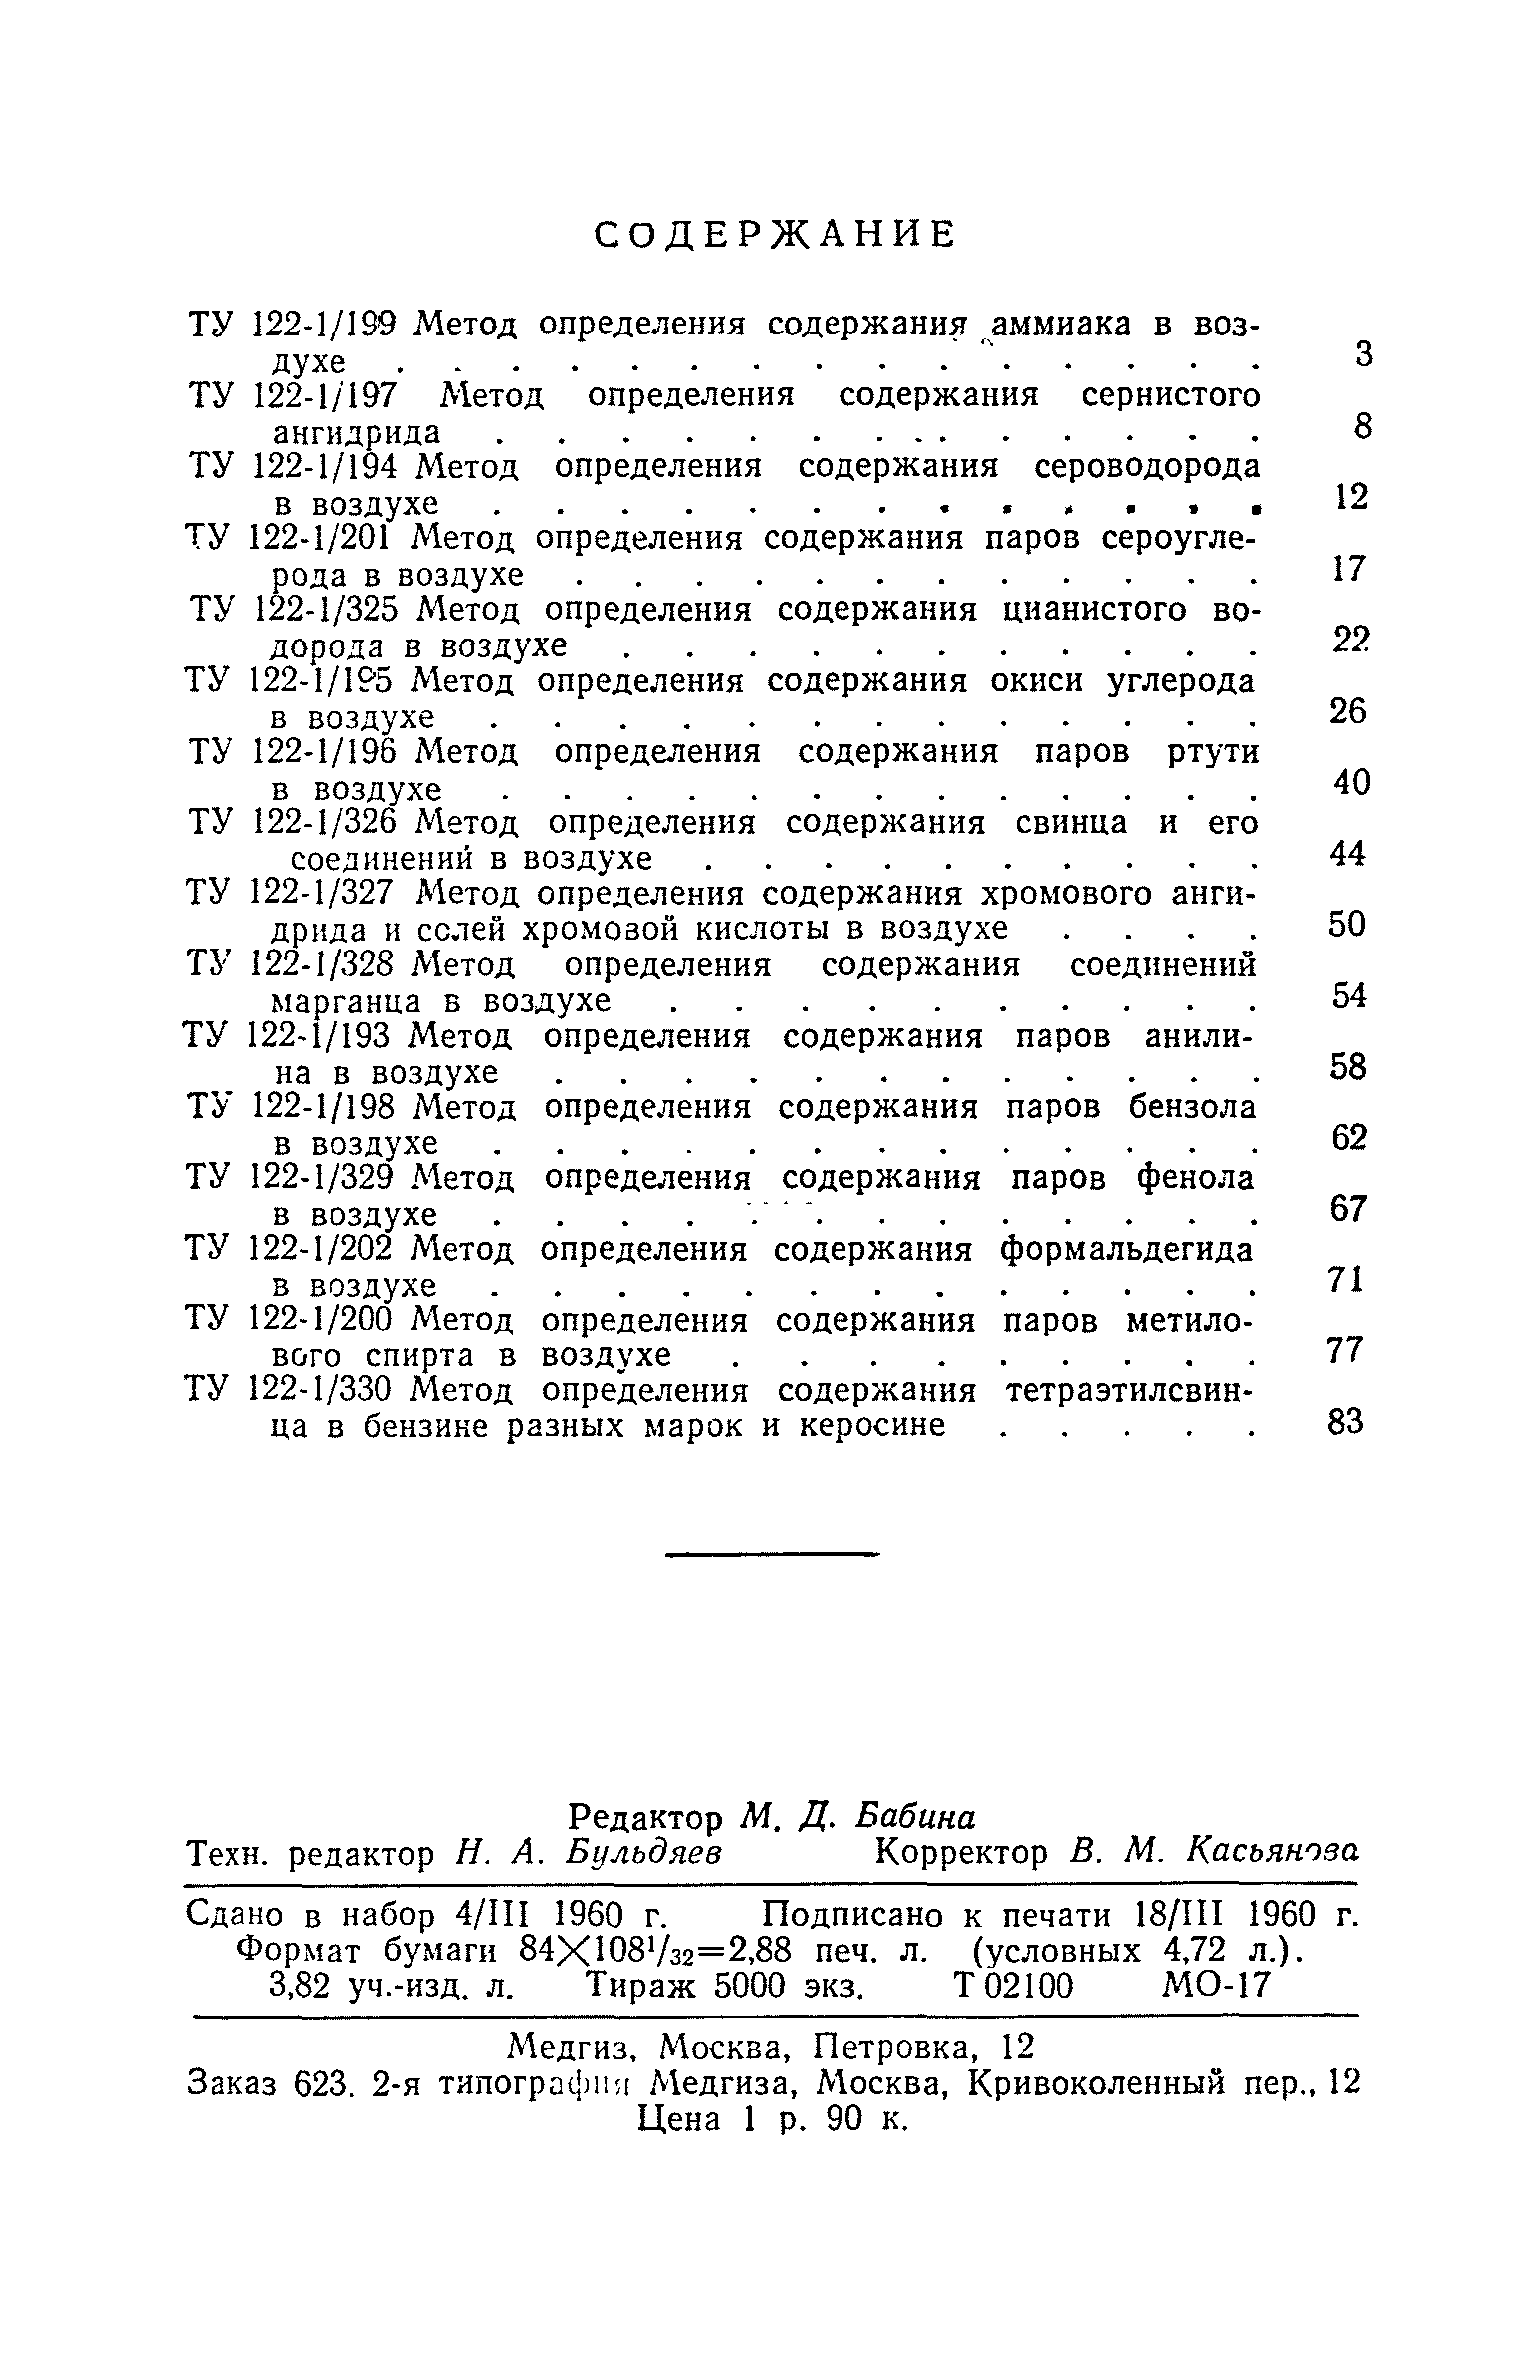 ТУ 122-1/198